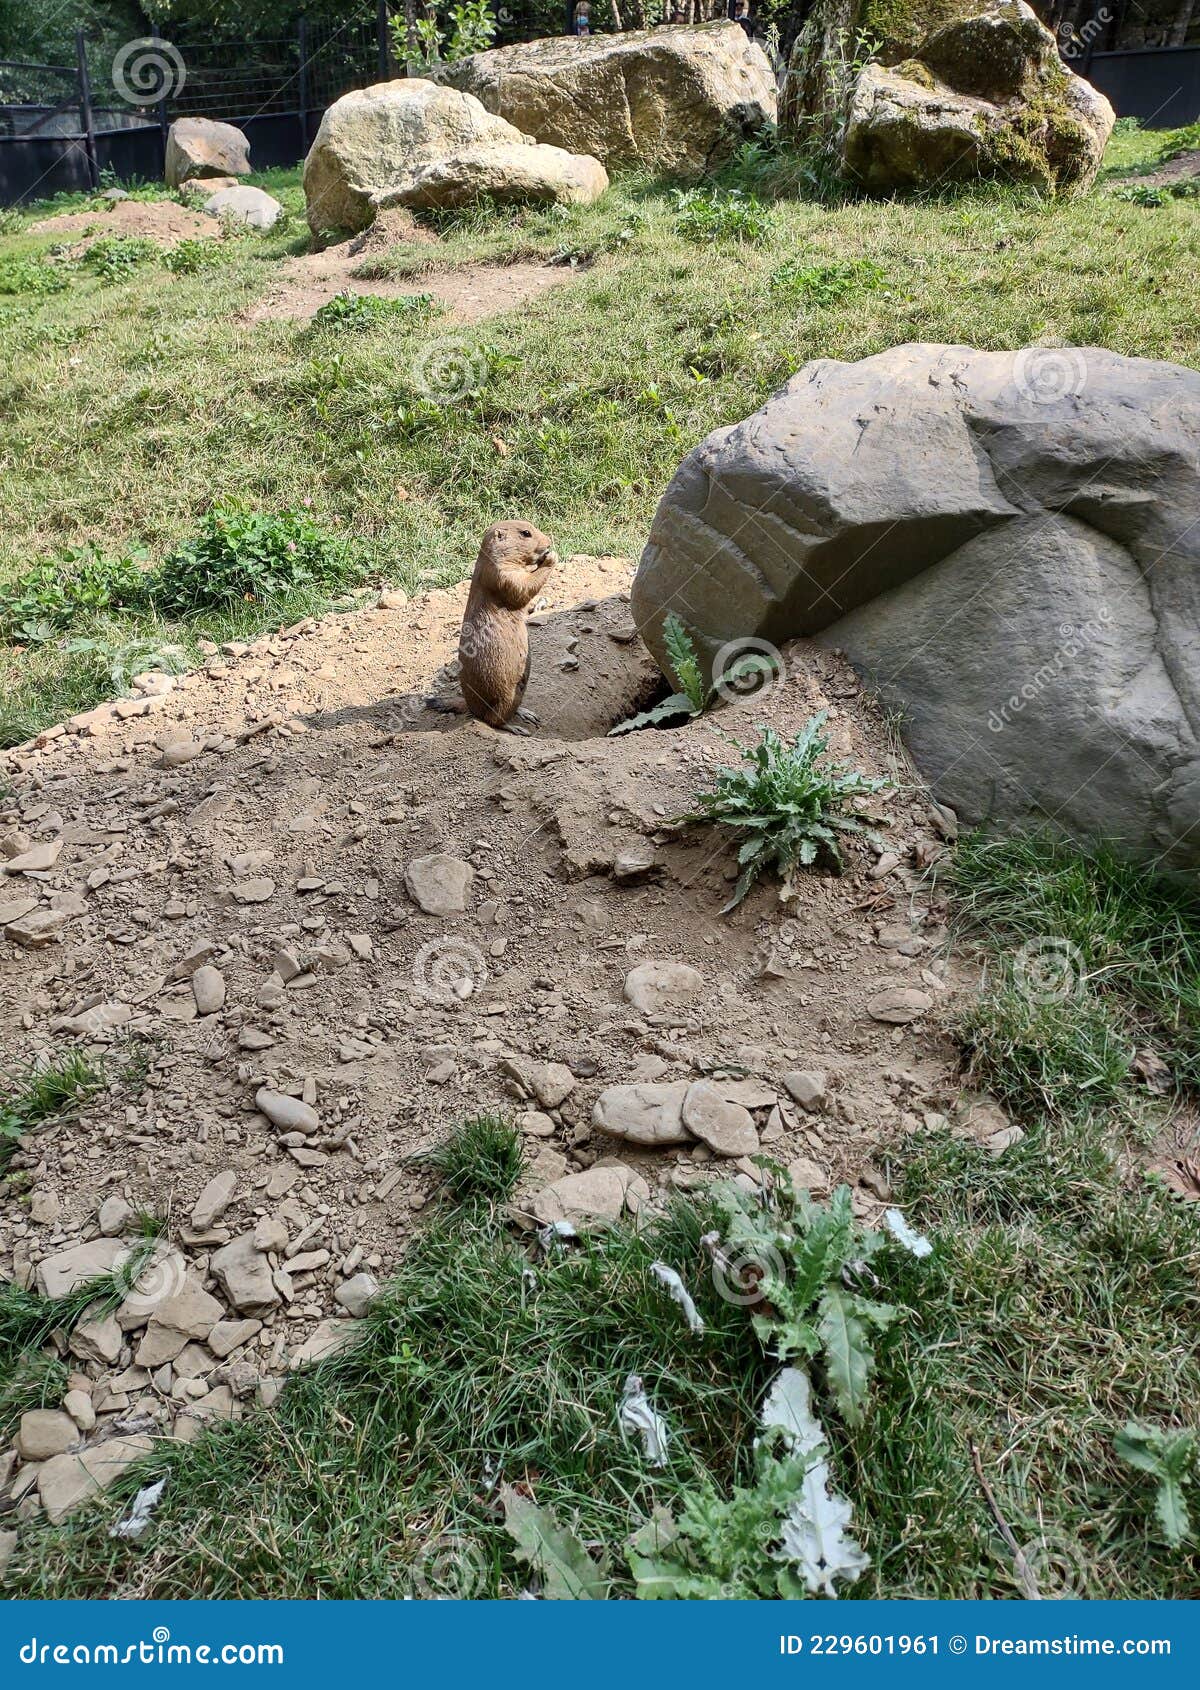 prairie dog in its burrow of stone